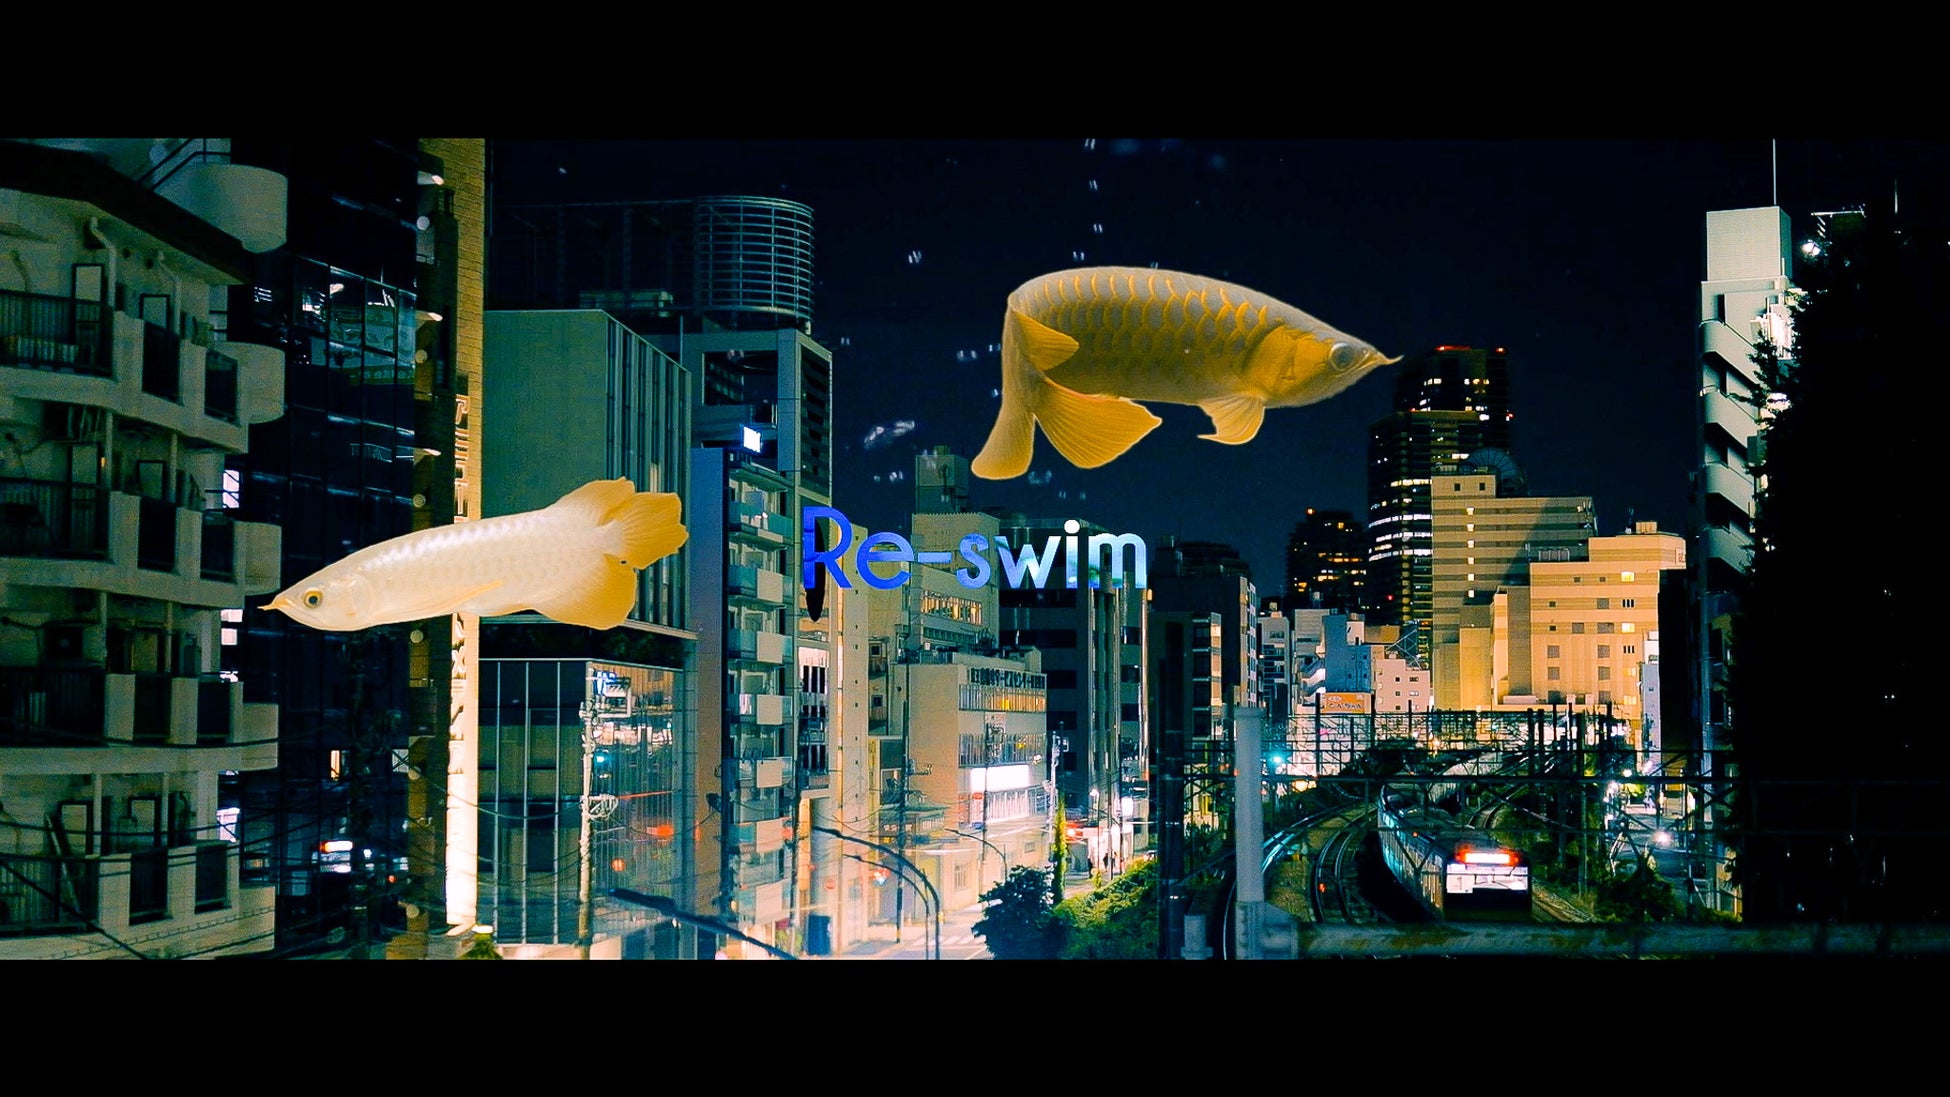 04 Limited Sazabys、10/18発売『Re-Birth』より、代表曲「swim」のセルフカバー「Re-swim」MUSIC VIDEOを公開のサブ画像1